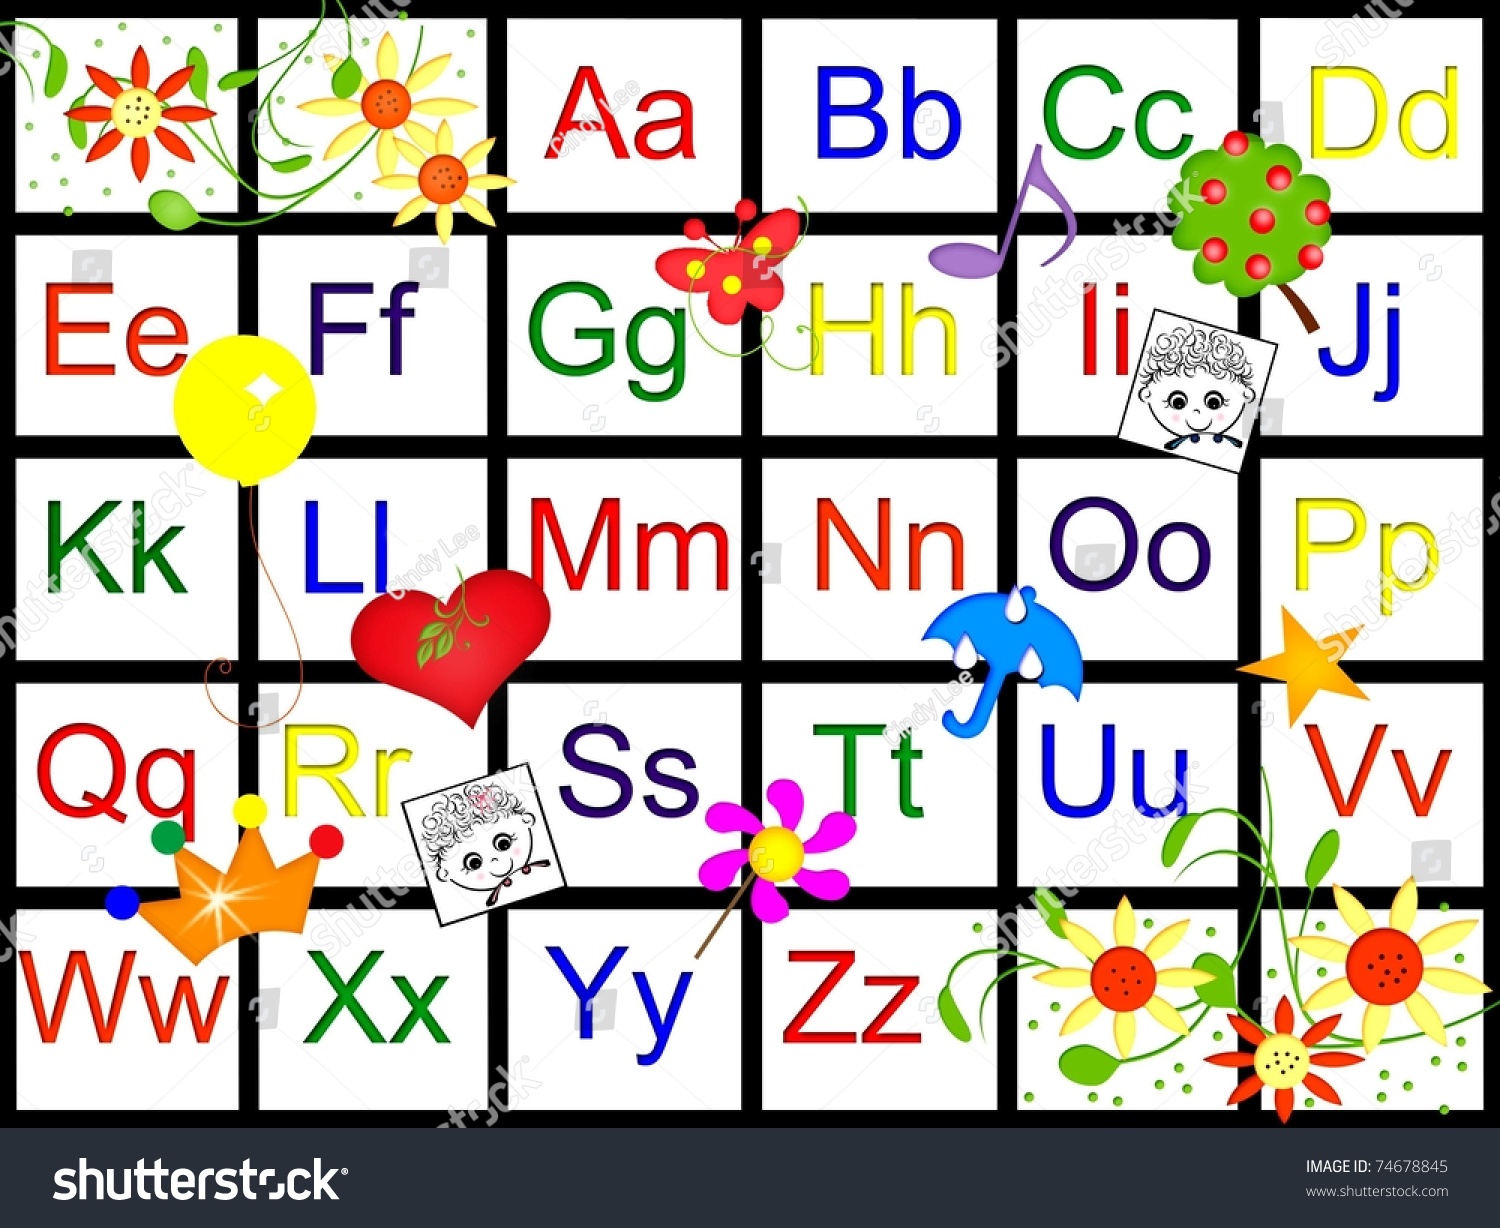 Alphabet Chart Images